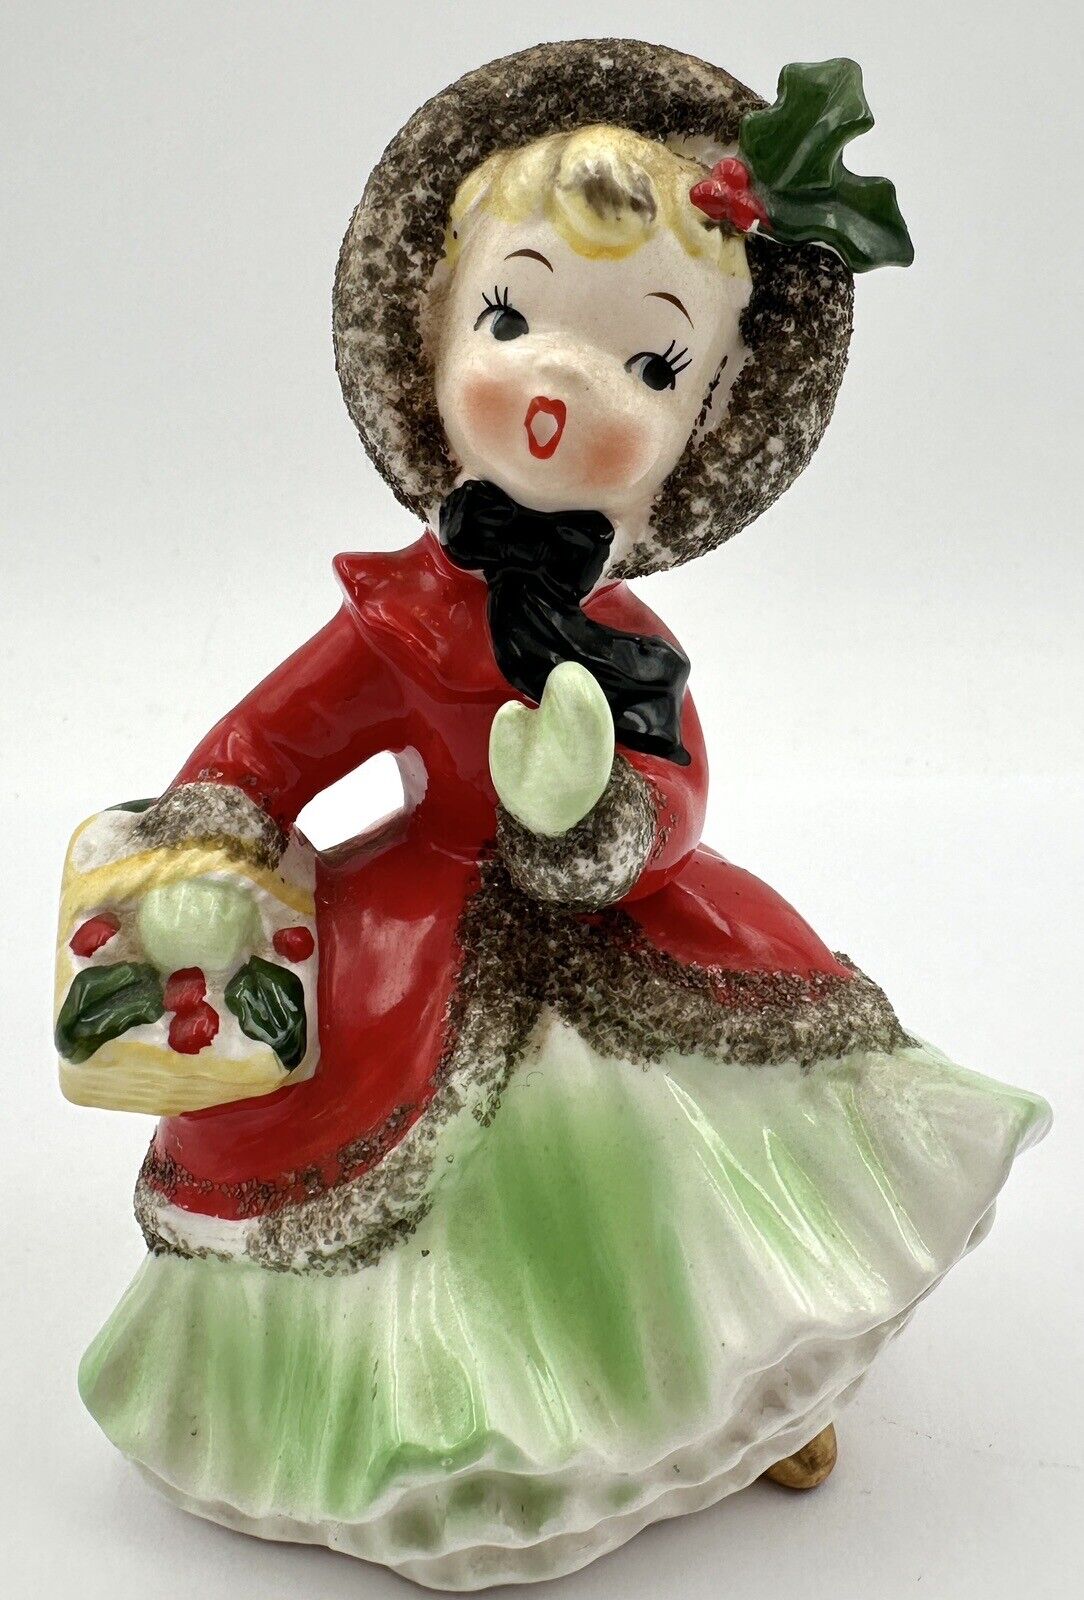 Vintage Napco Christmas Figurine Shopping Girl Basket Mica Trim AX2750/SB